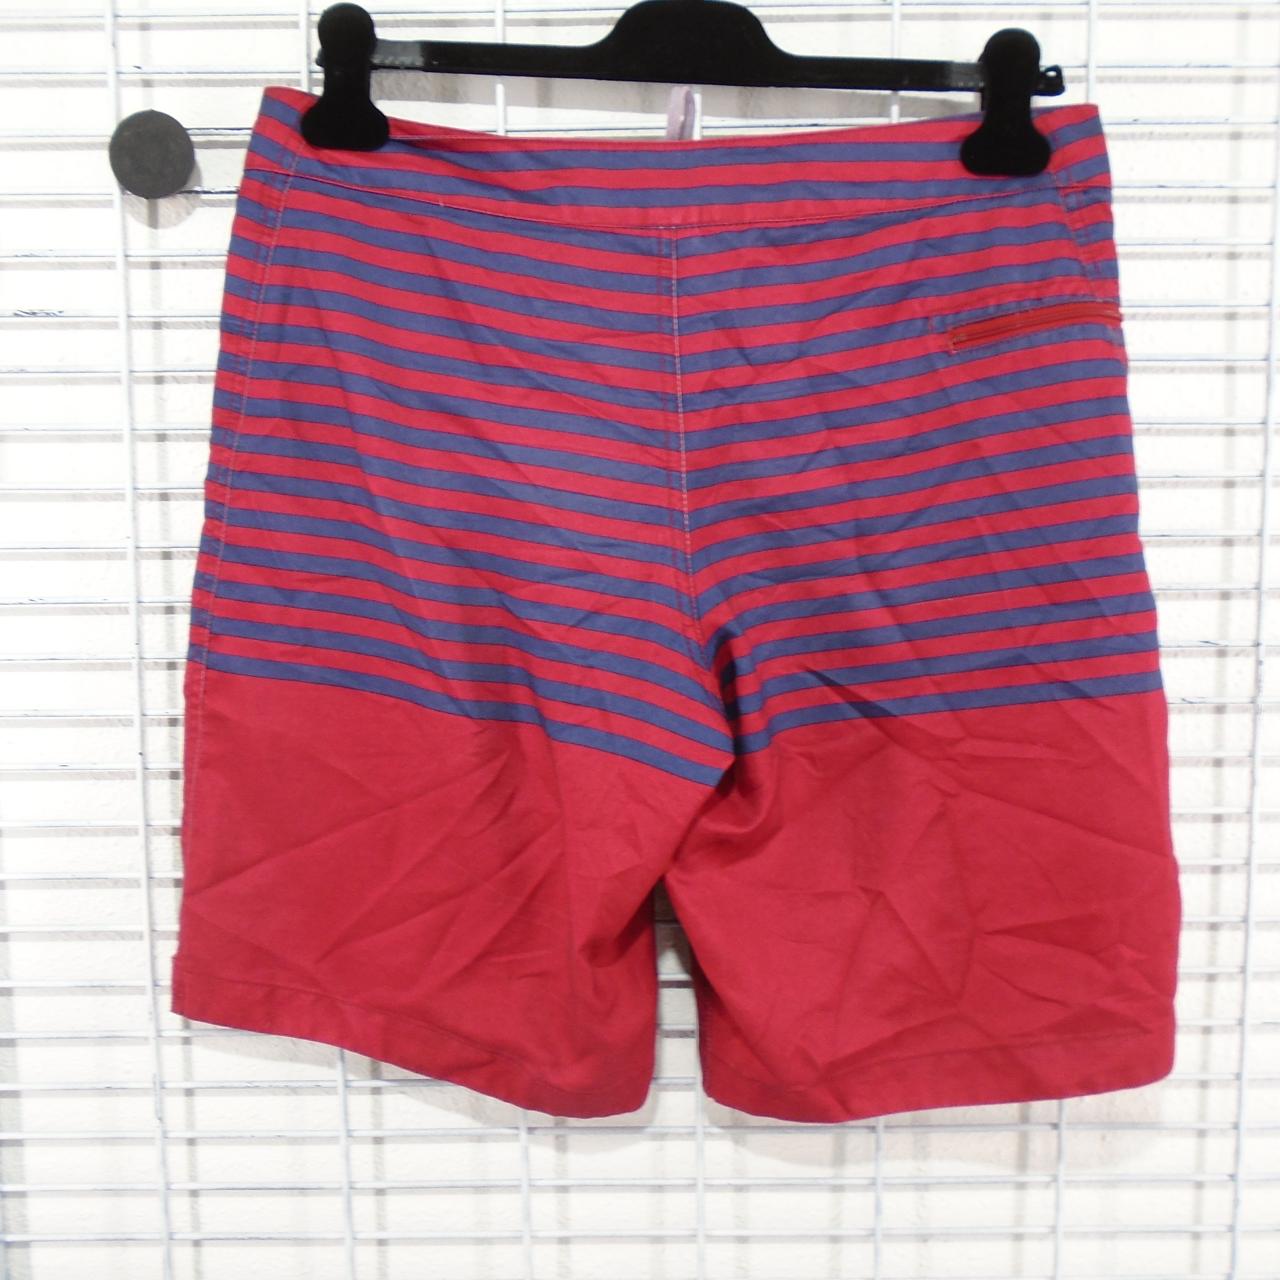 Men's Shorts GAP. Multicolor. M. Used. Good